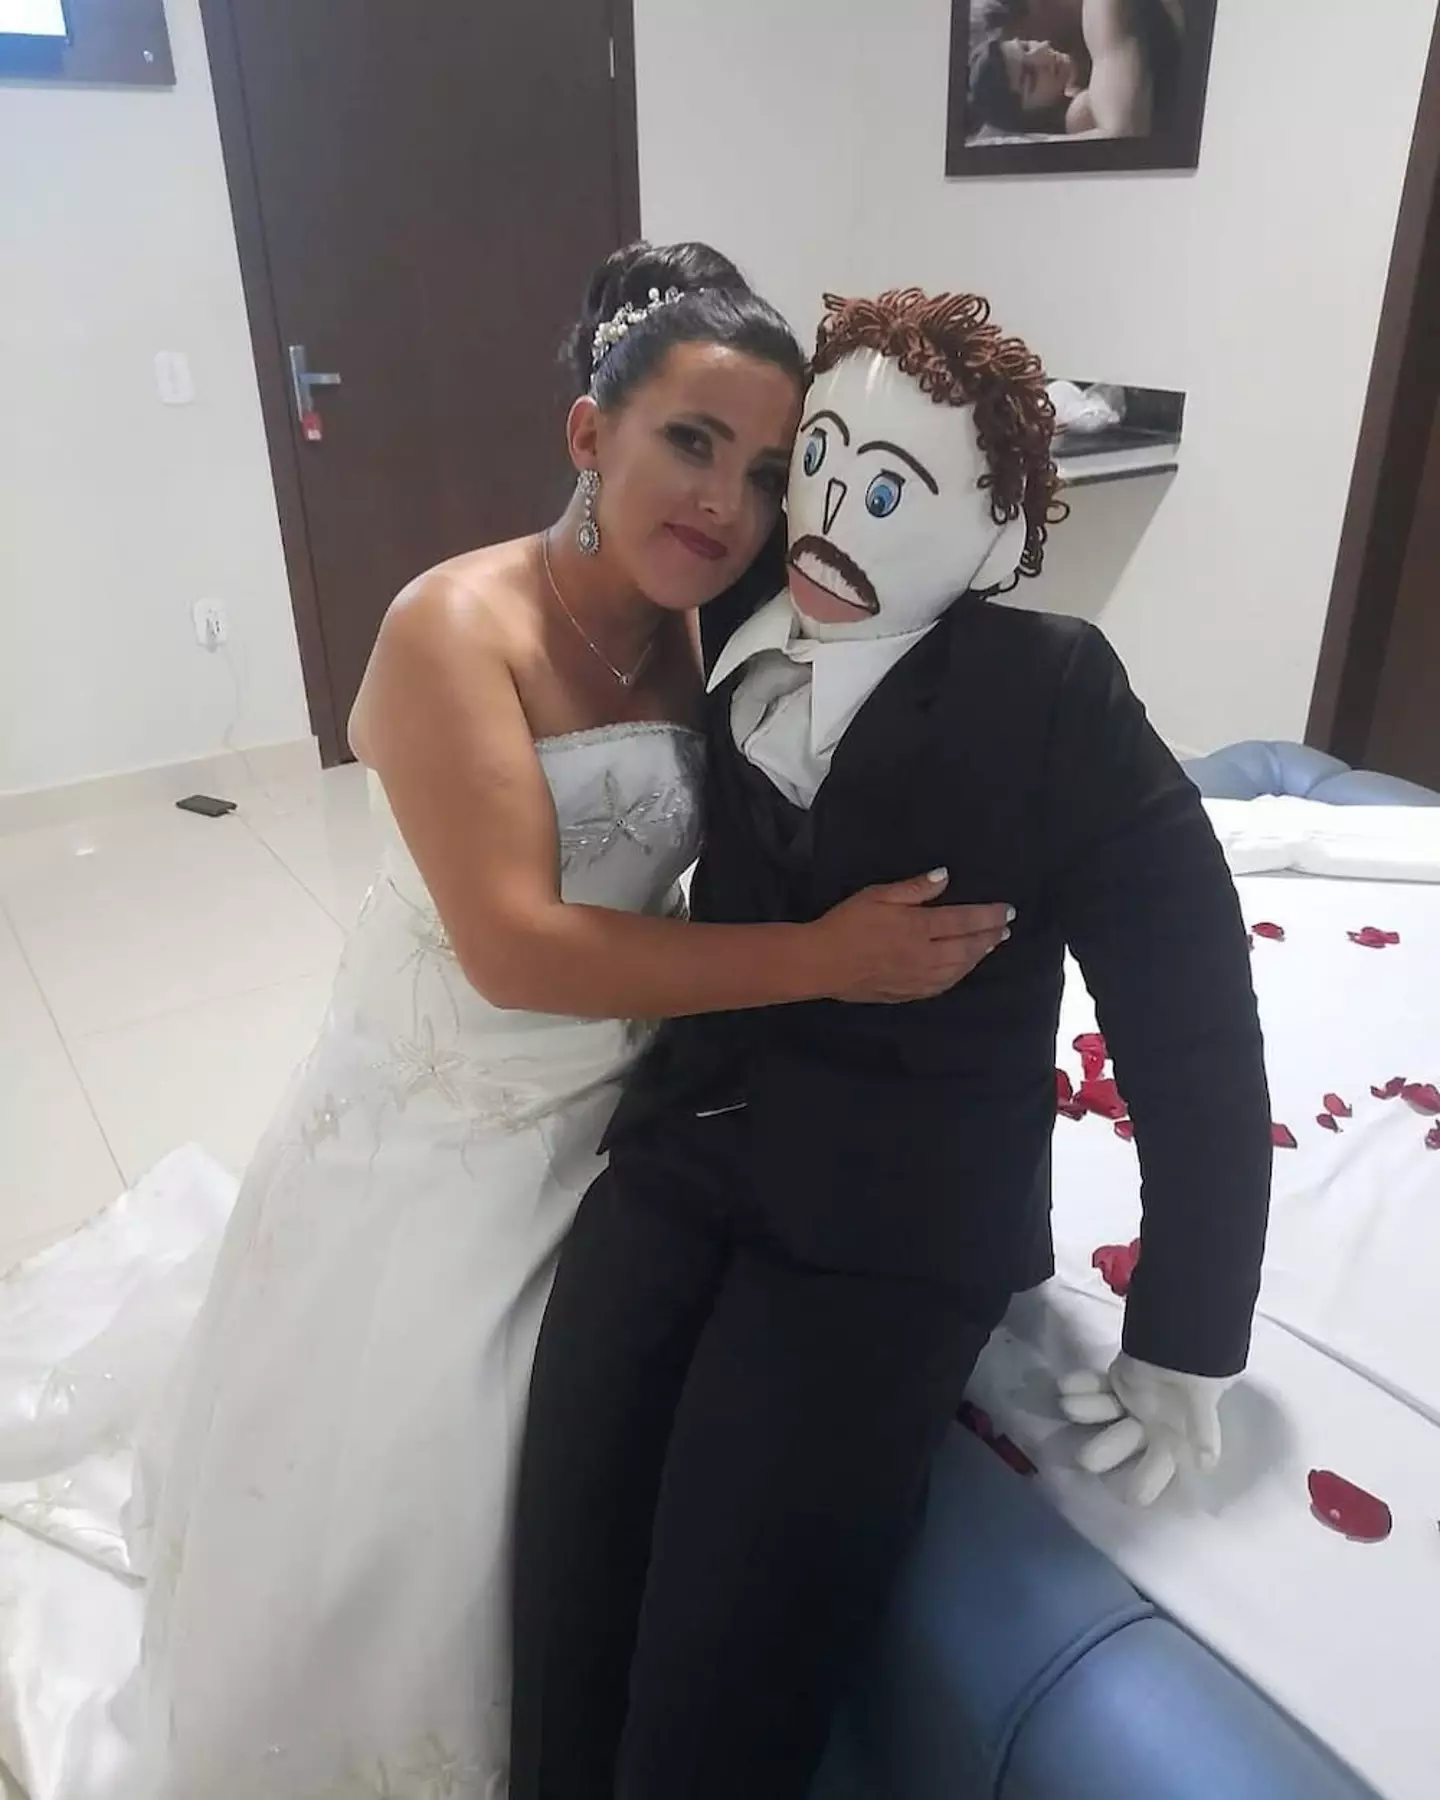 Meirivone Rocha Moraes and Marcelo on their wedding day.